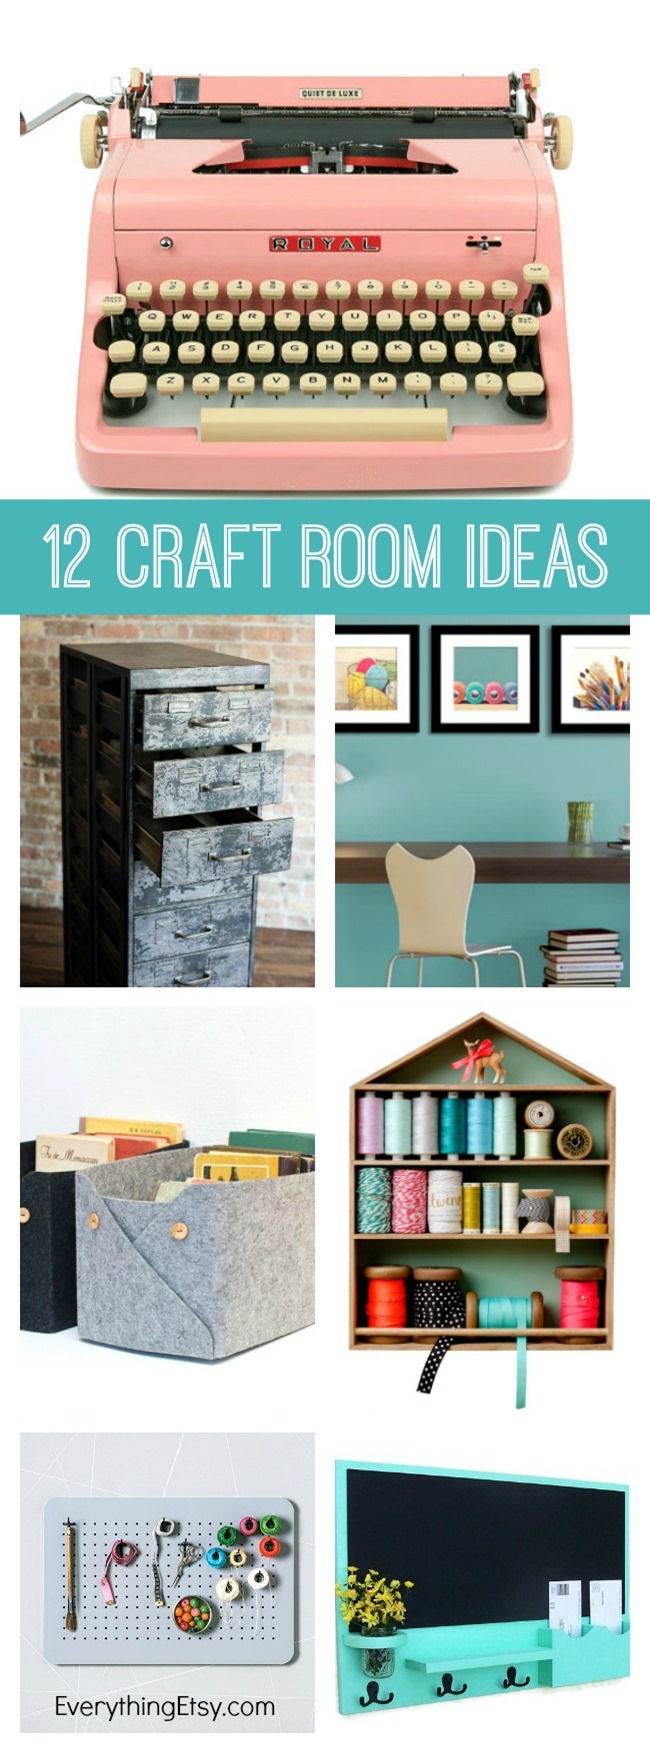 12 Craft Room Decorating Ideas on Etsy - EverythingEtsy.com